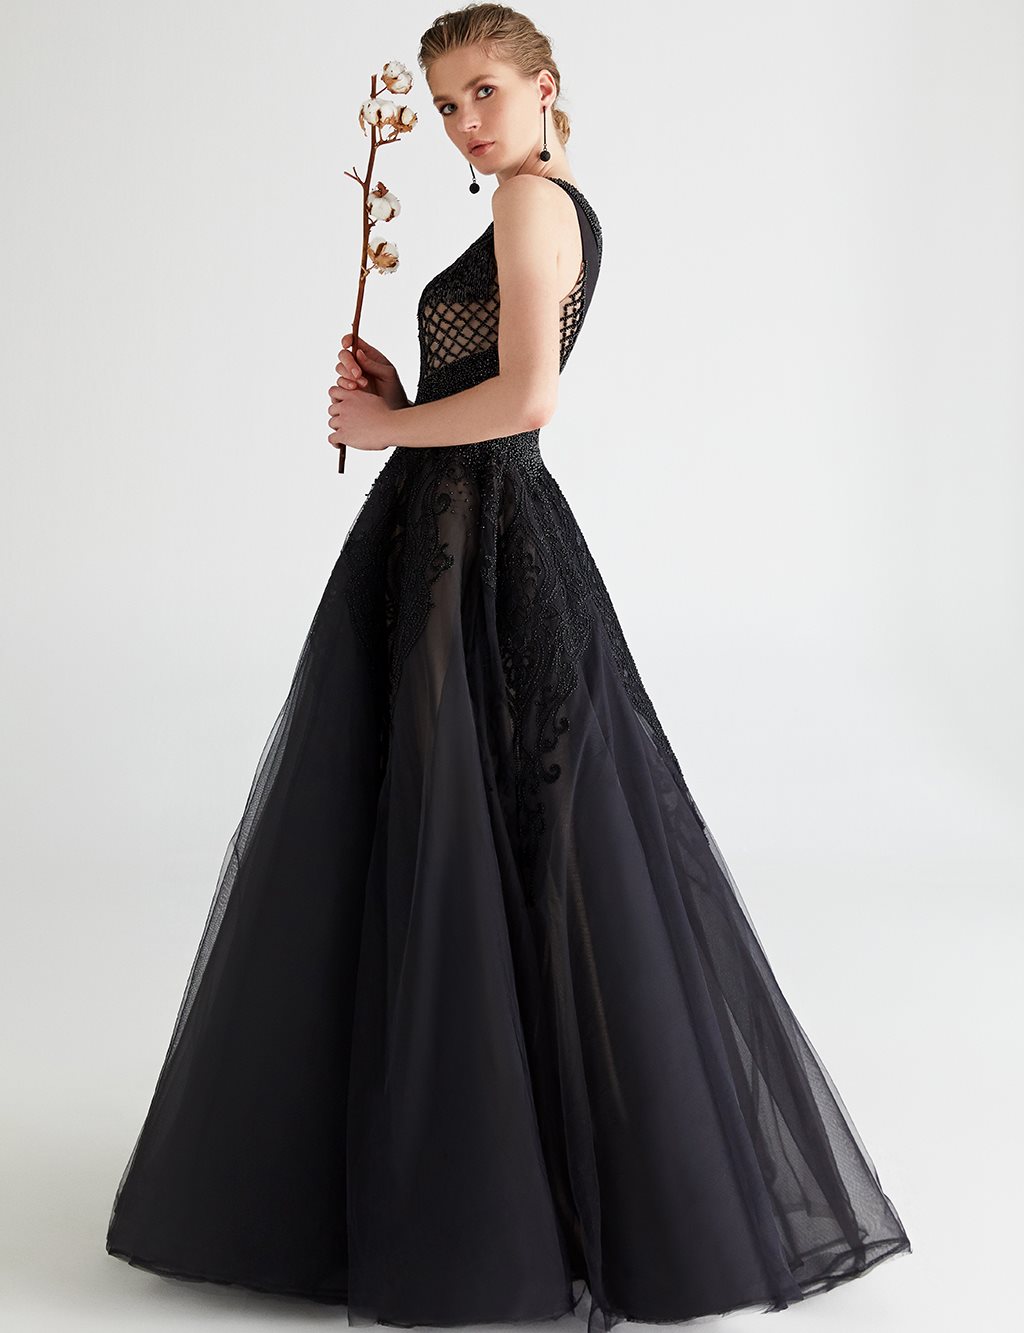 TIARA Tasseled, Embroidered Evening Dress B9 26096 Black